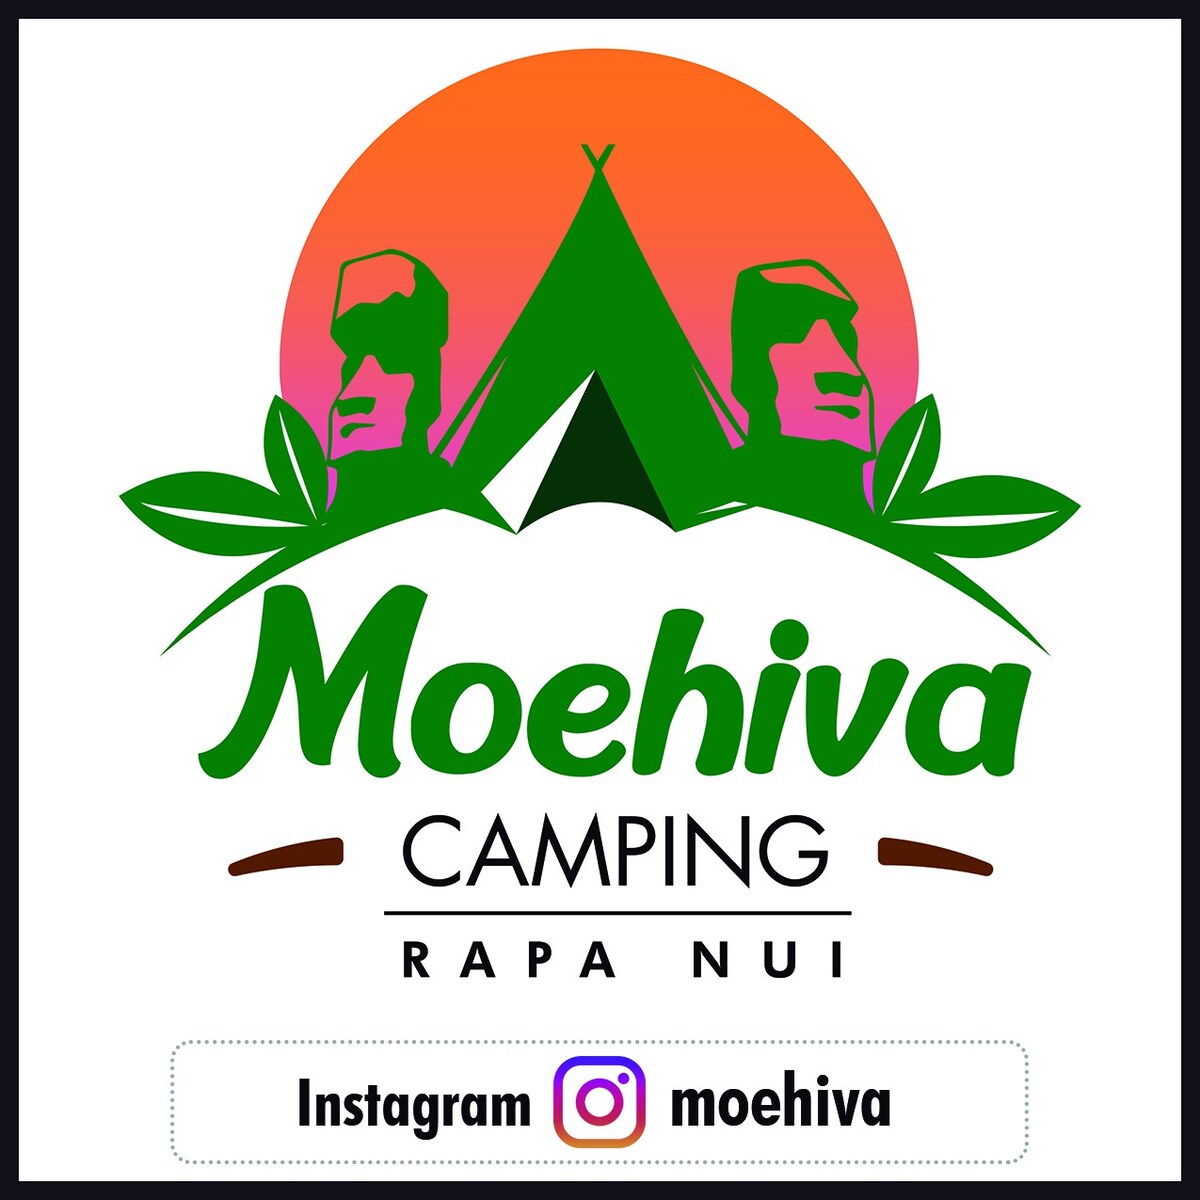 Camping Moehiva rapa nui.